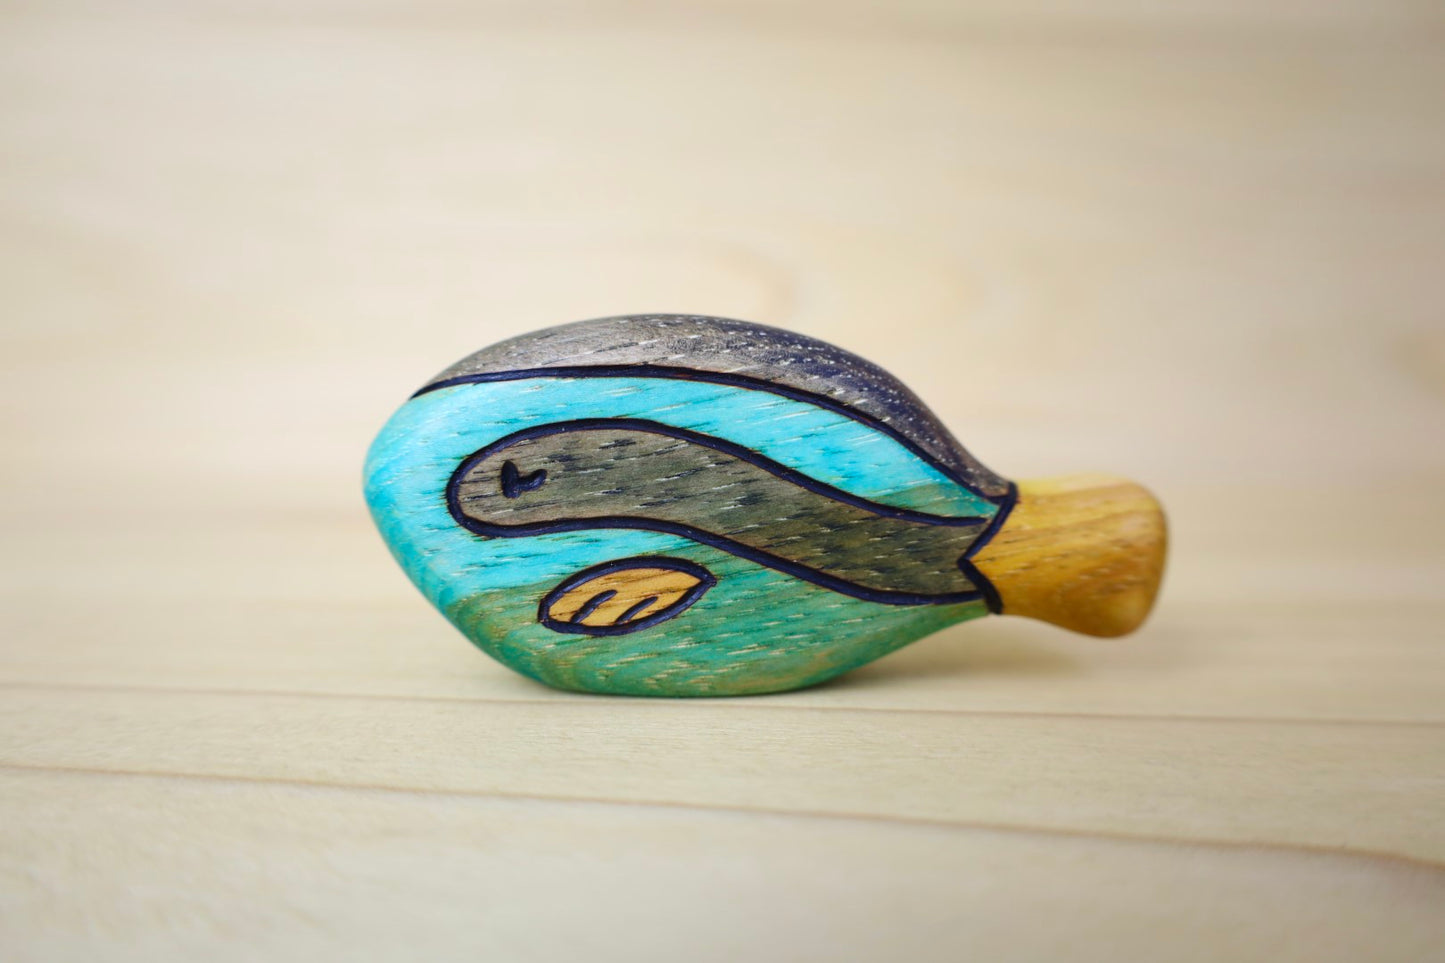 Wooden Blue Tang Surgeonfish Fish Toy